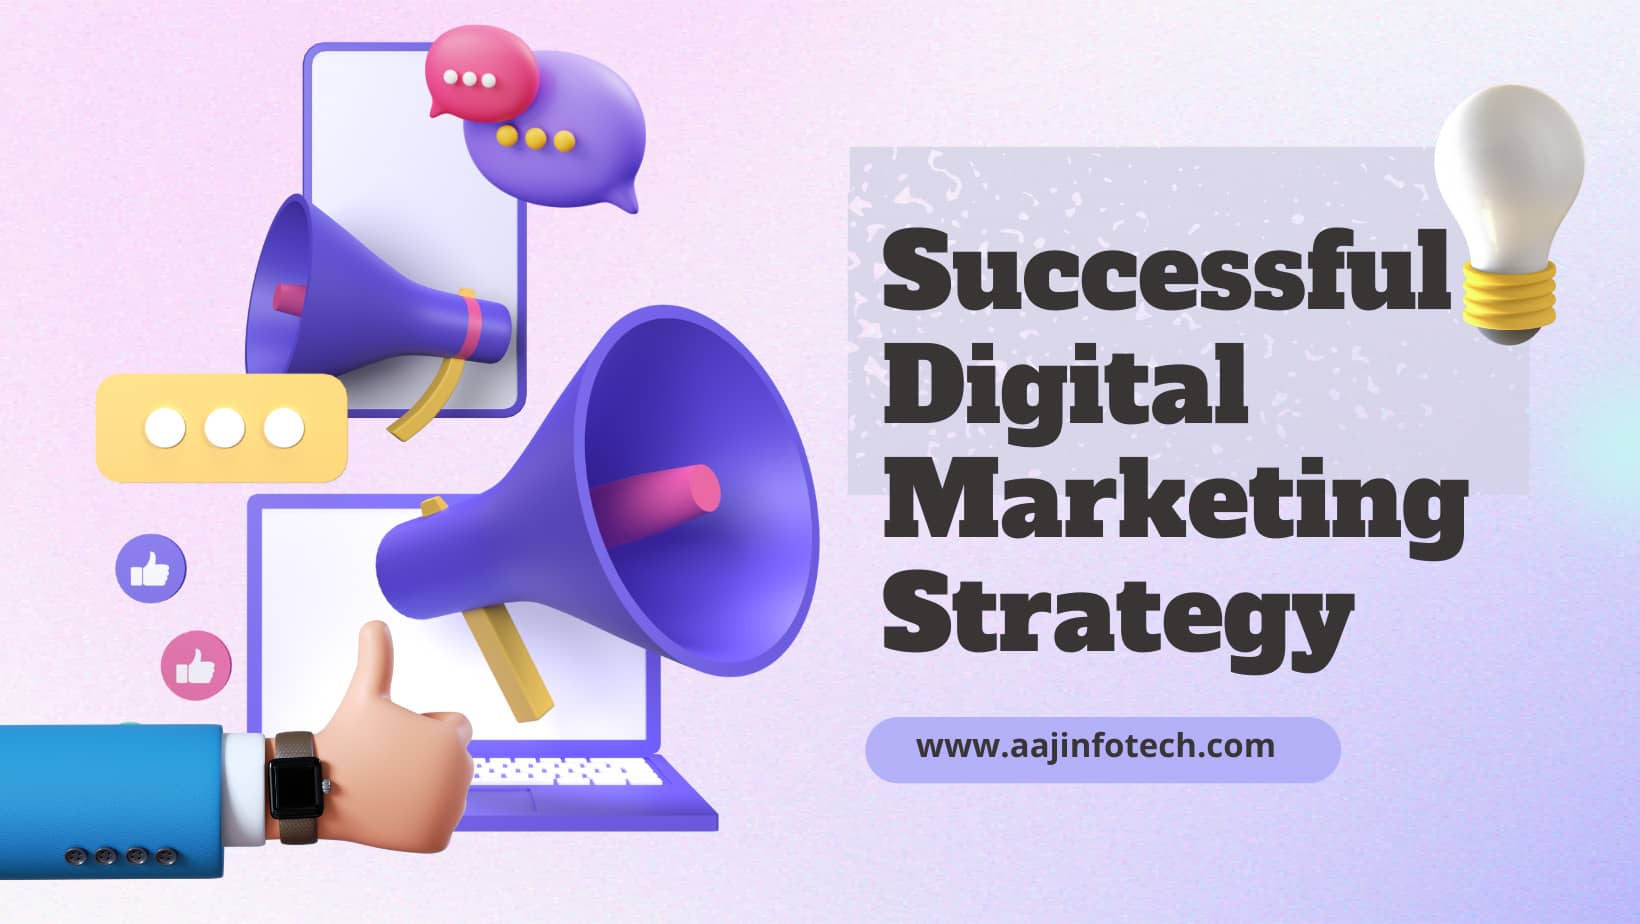 A successful digital marketing strategy